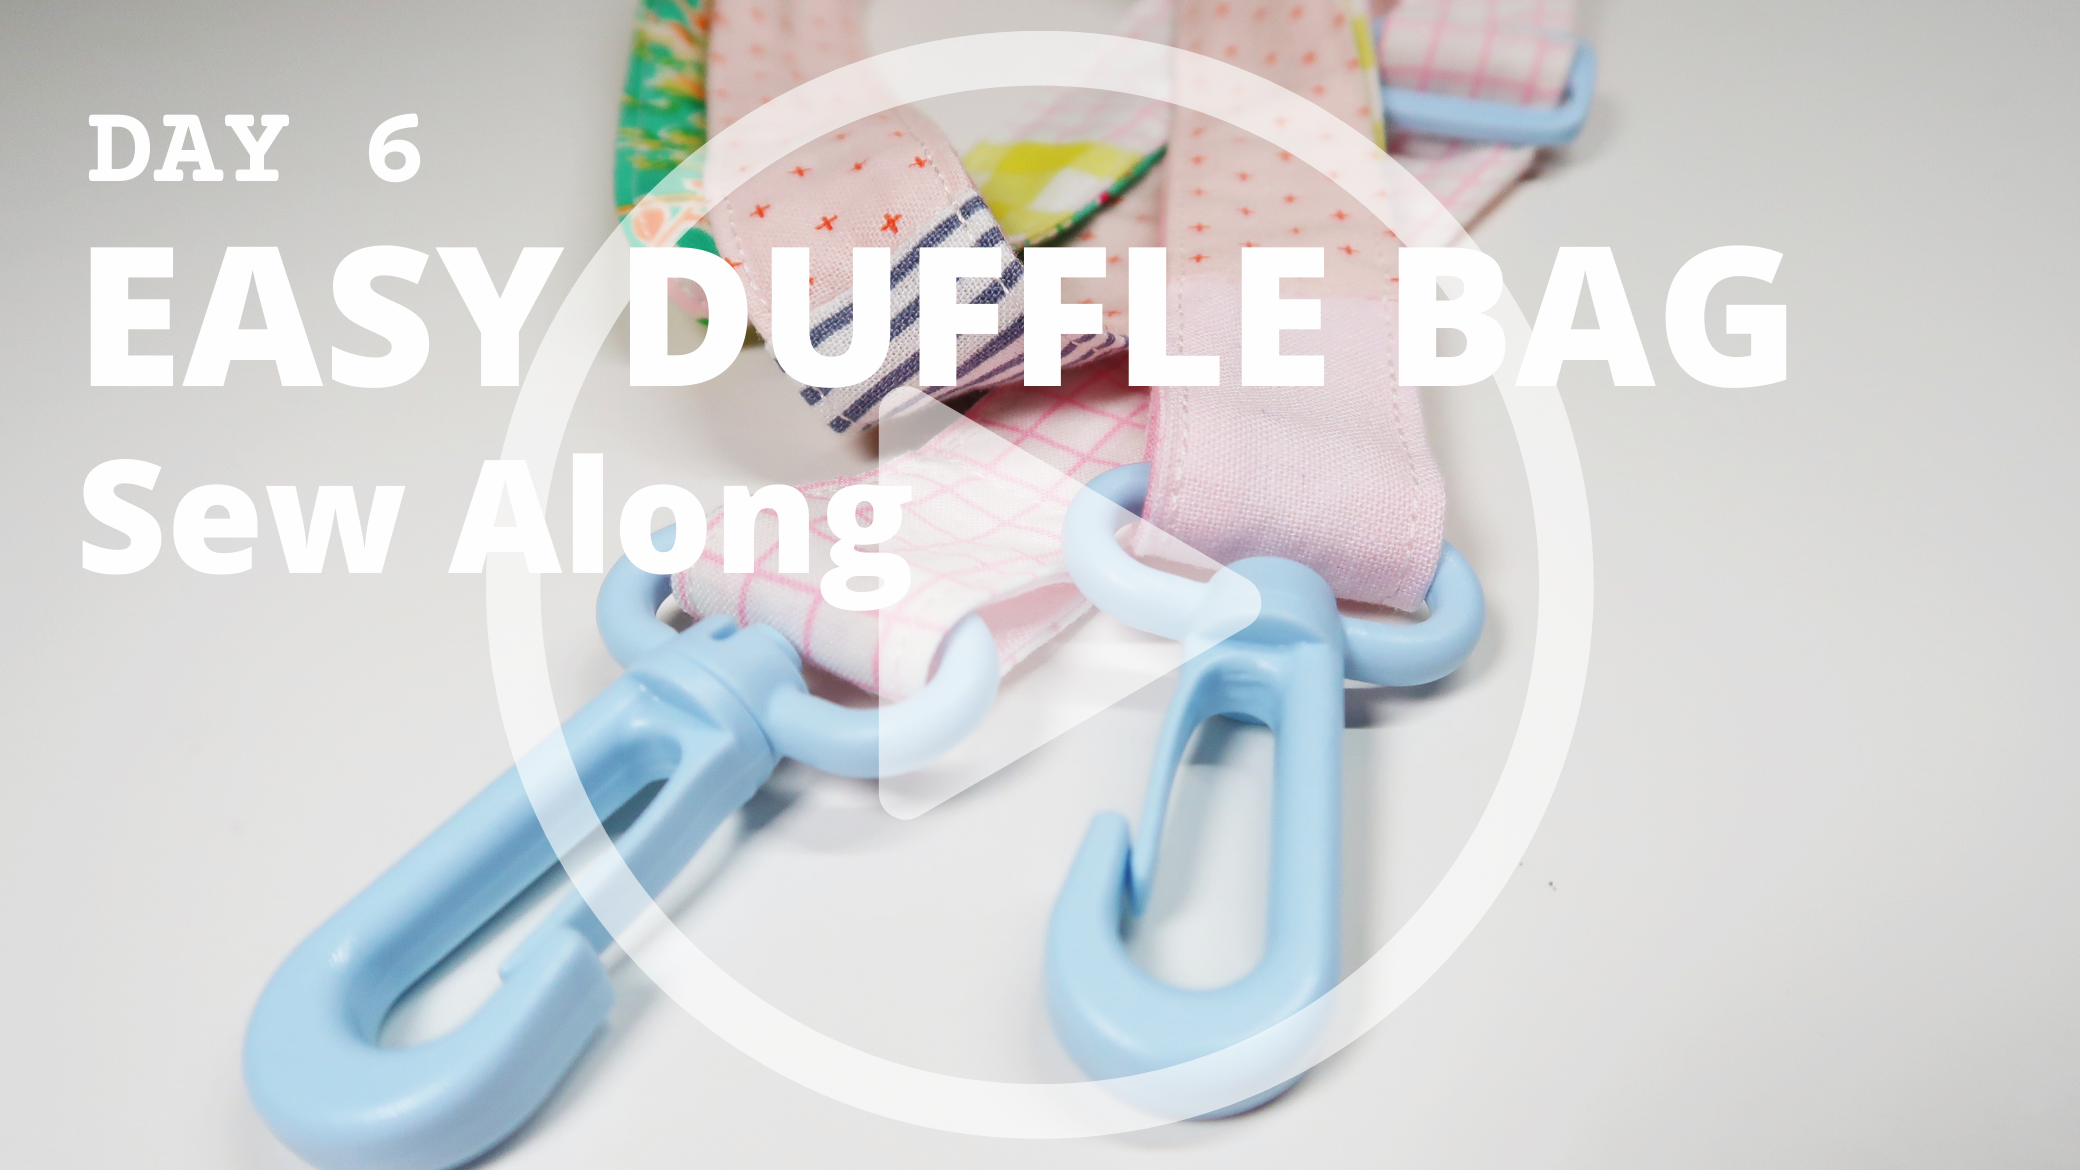 Easy Duffle Bag Sew Along on YouTube